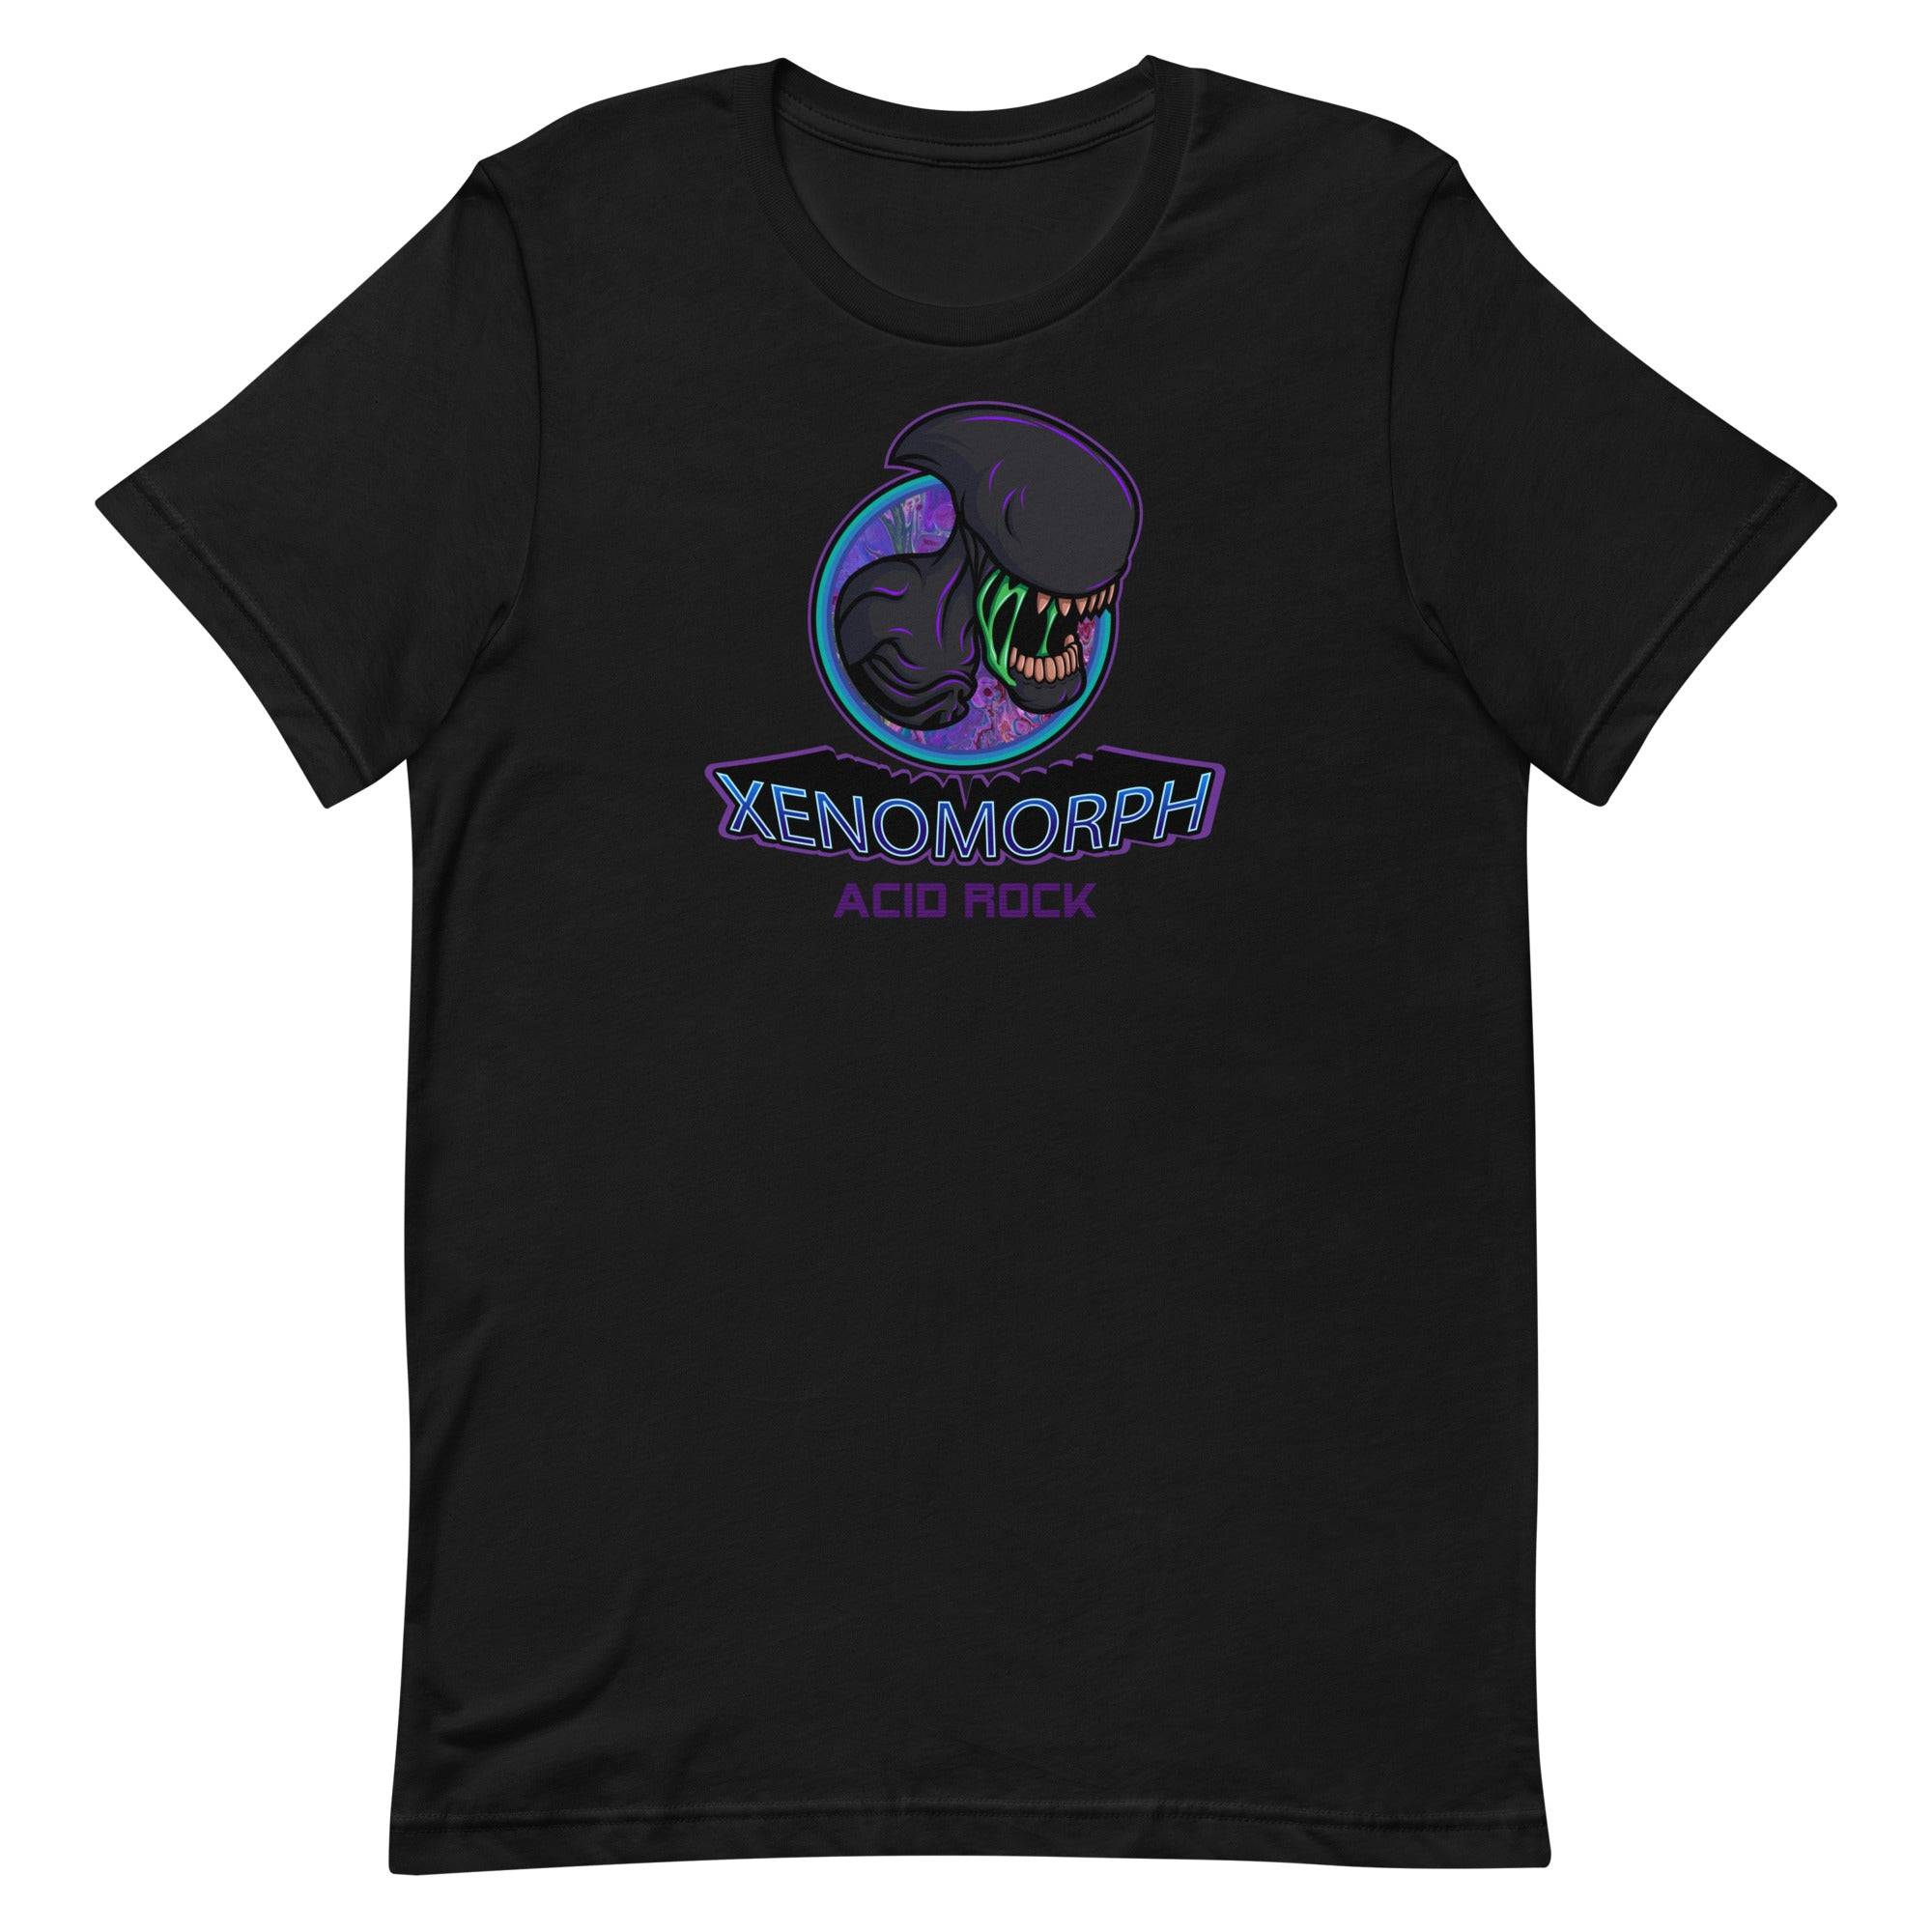 Xenomorph Unisex t-shirt